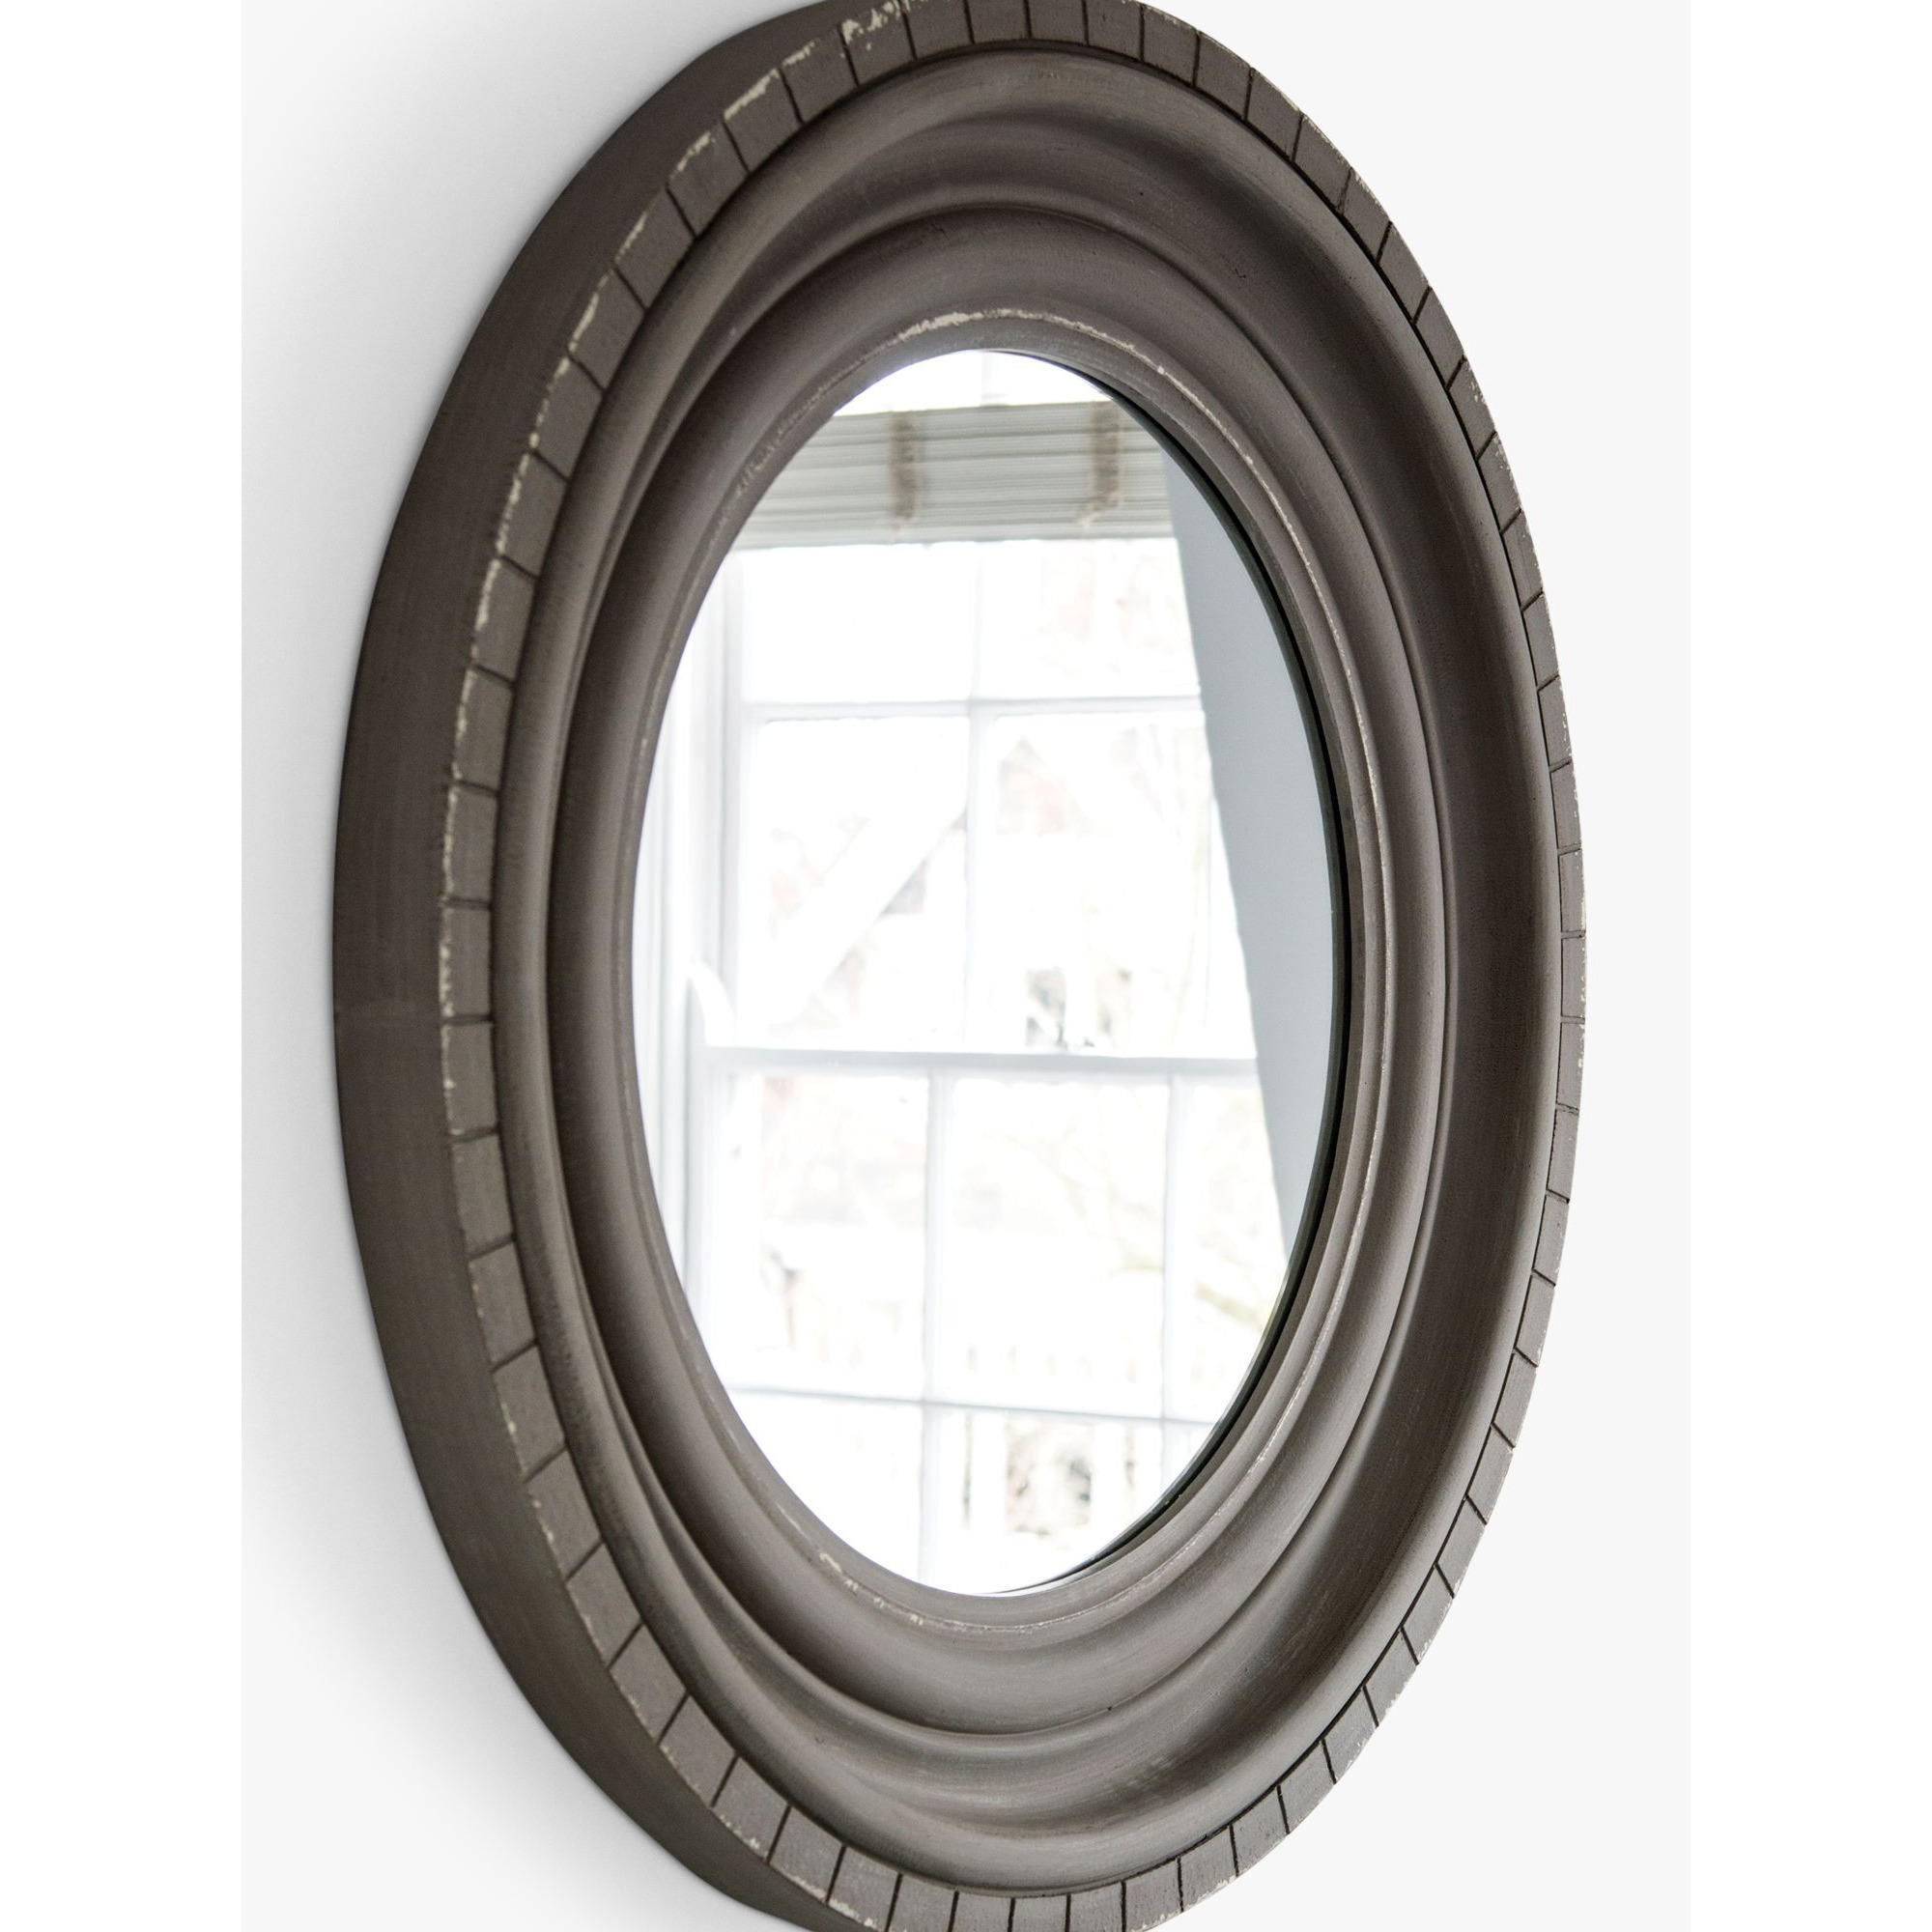 One.World Wilton Round Wood Wall Mirror, 92cm, Grey - image 1